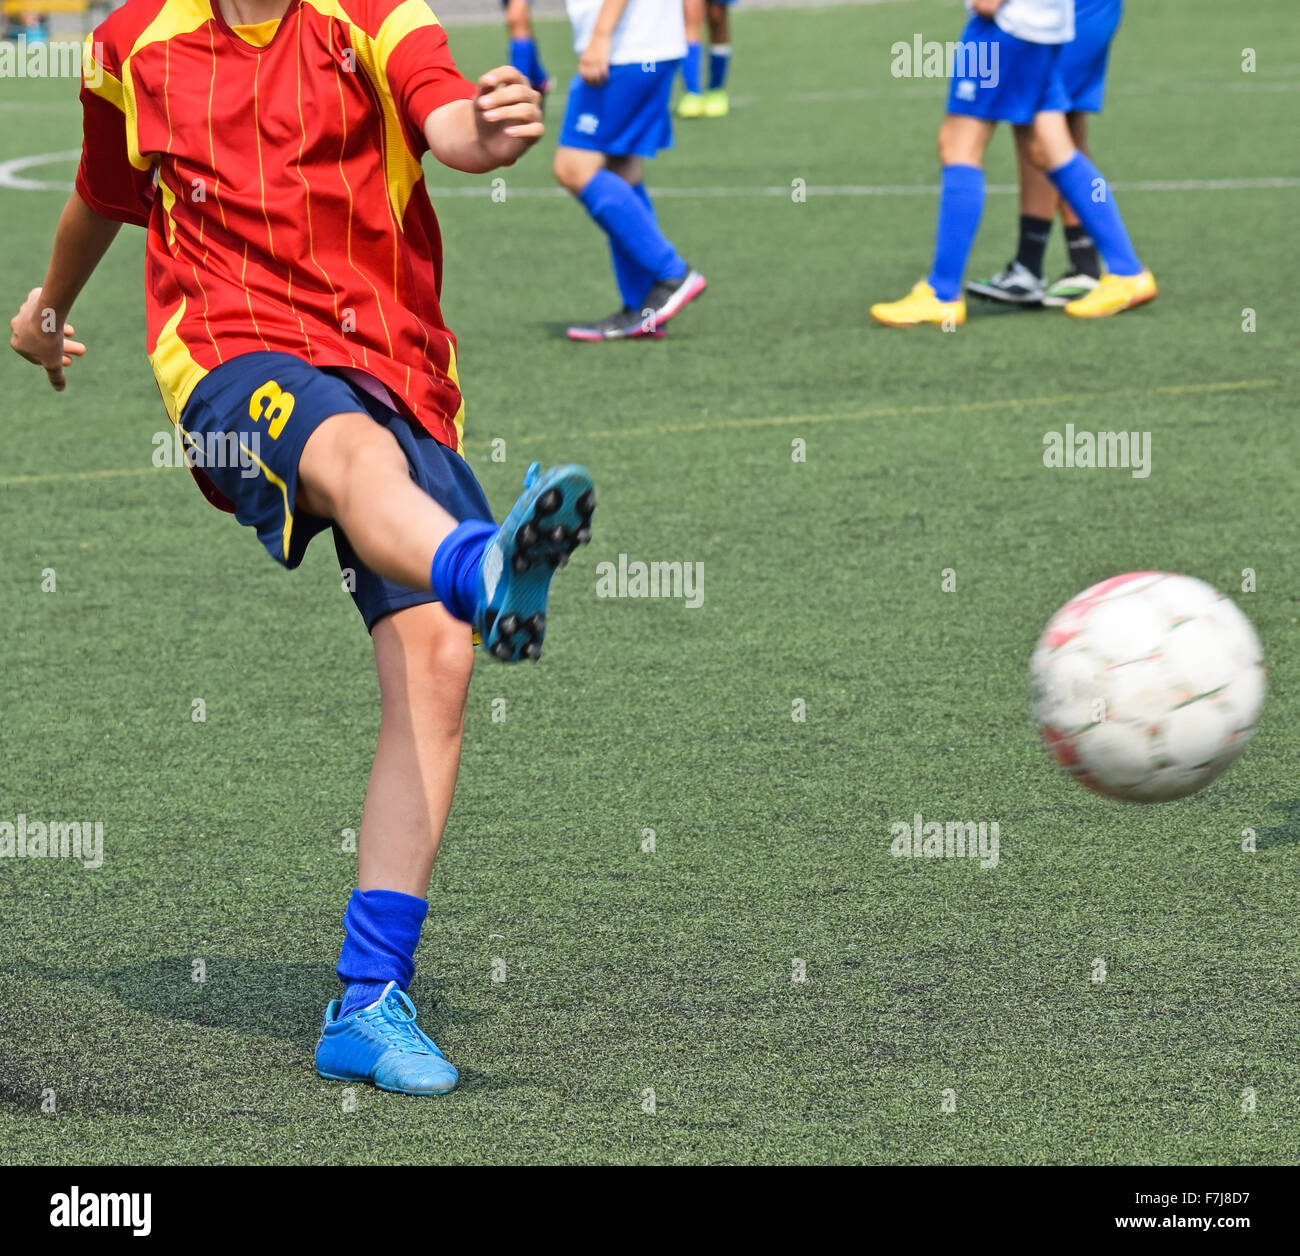 Young soccer player kicks the ball Stock Photo